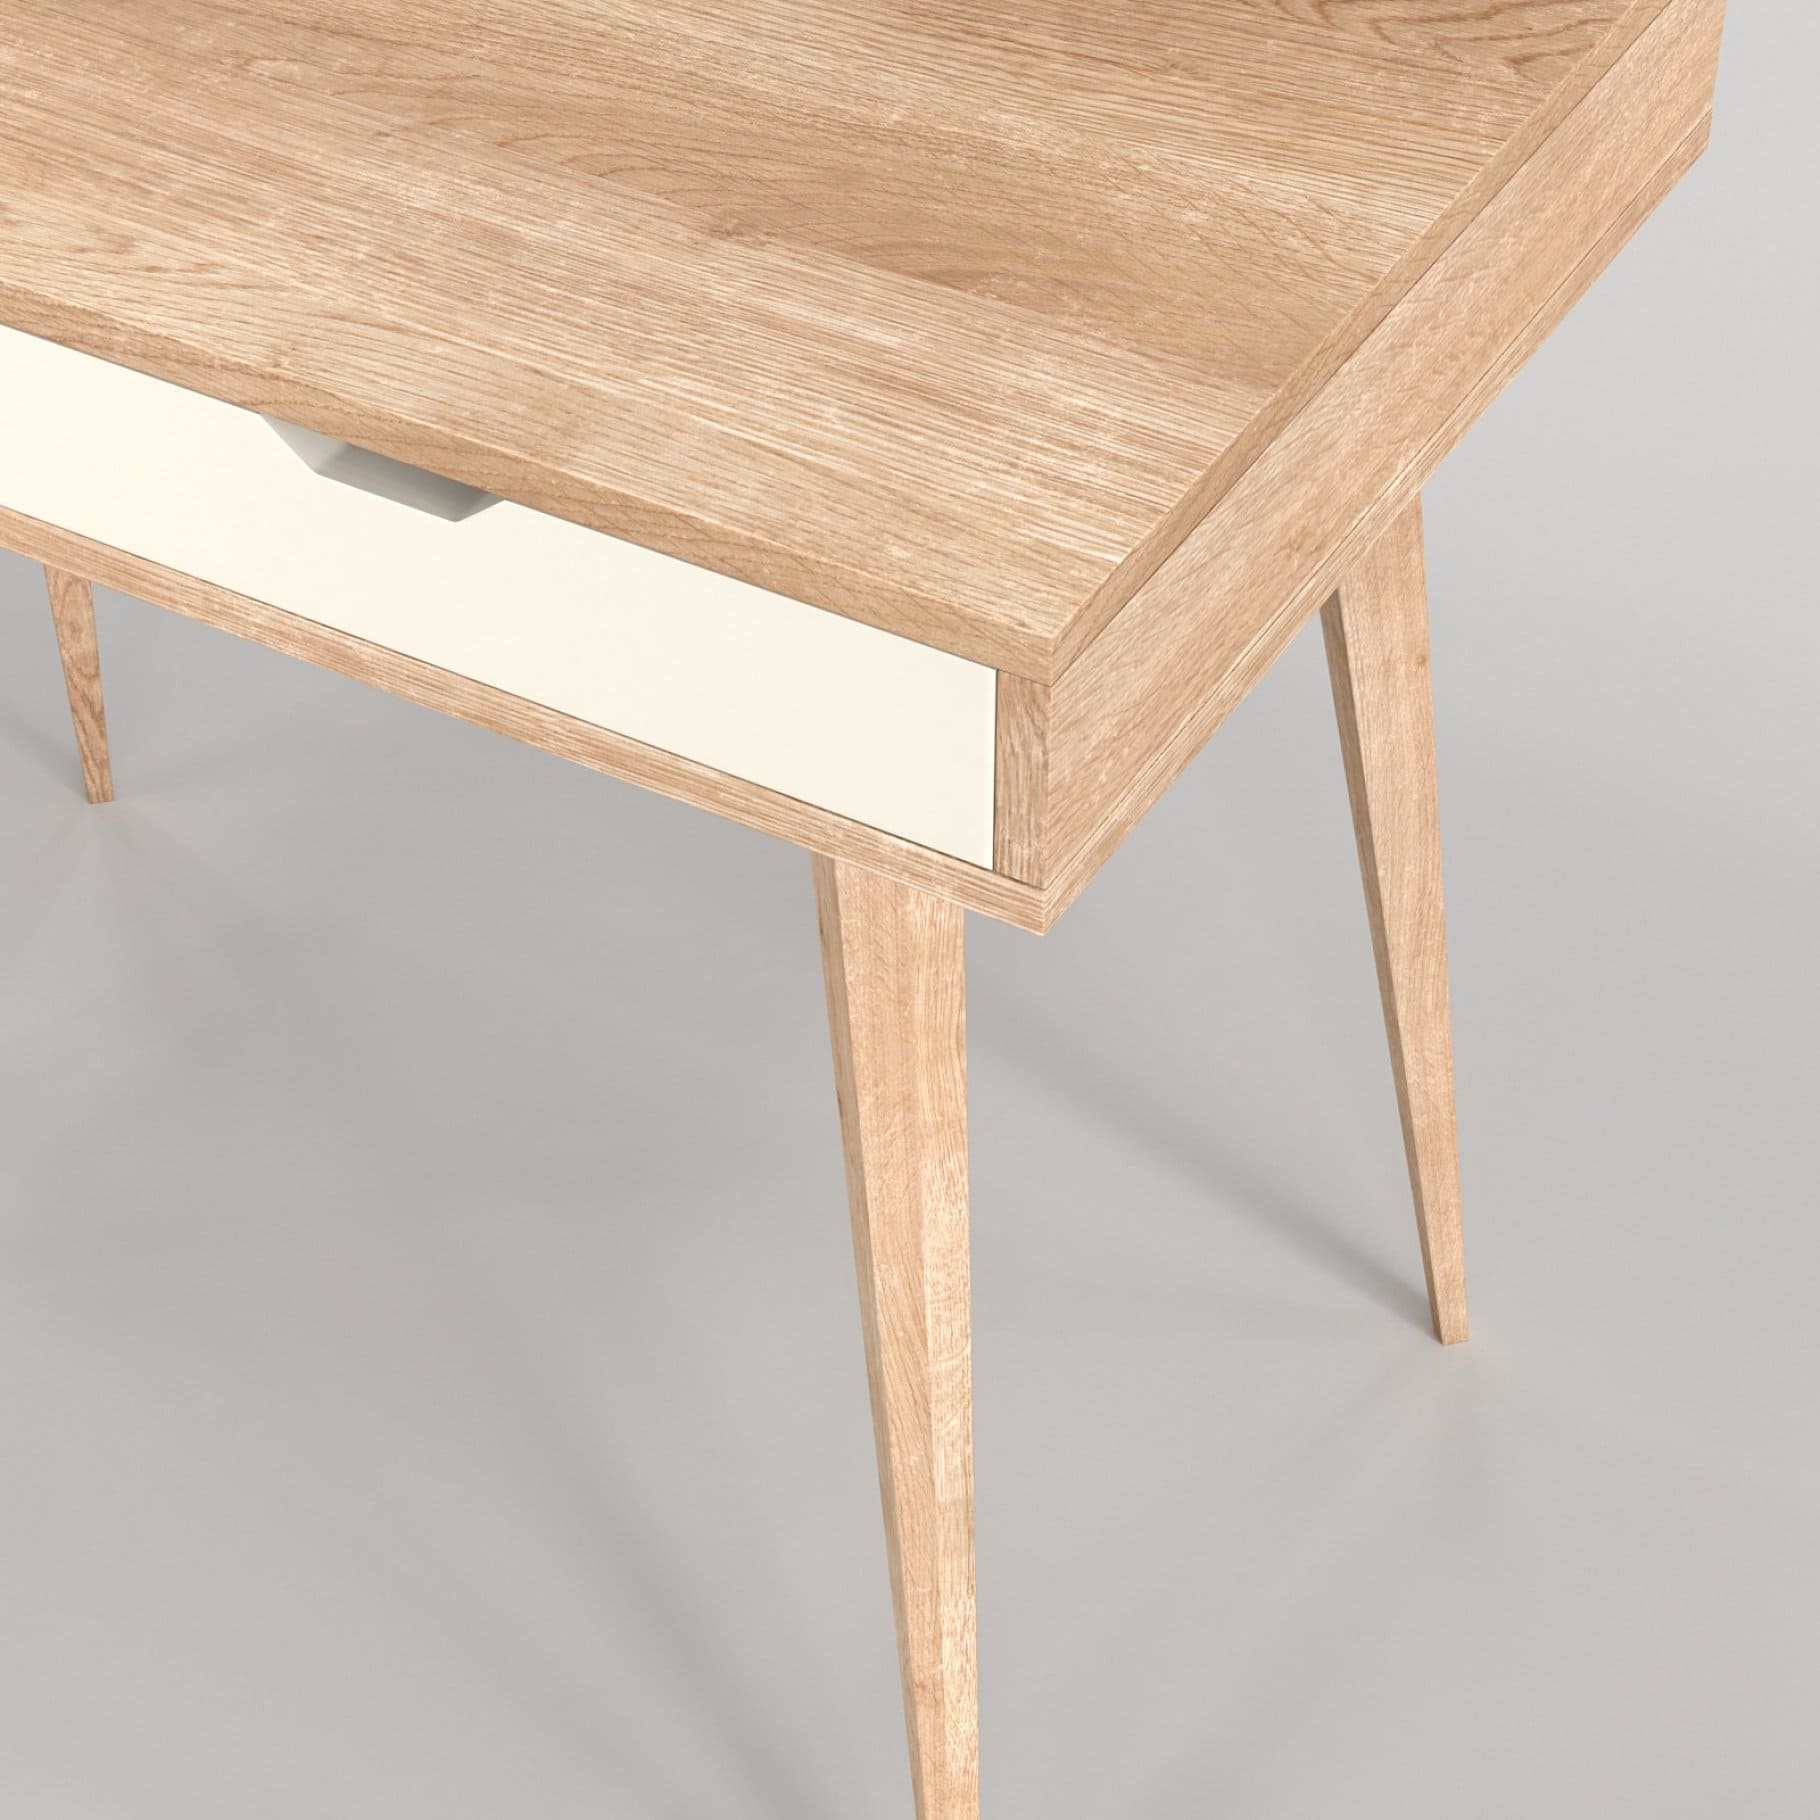 Photo of a corner of a wooden Scandinavian desk with shelves model 04.